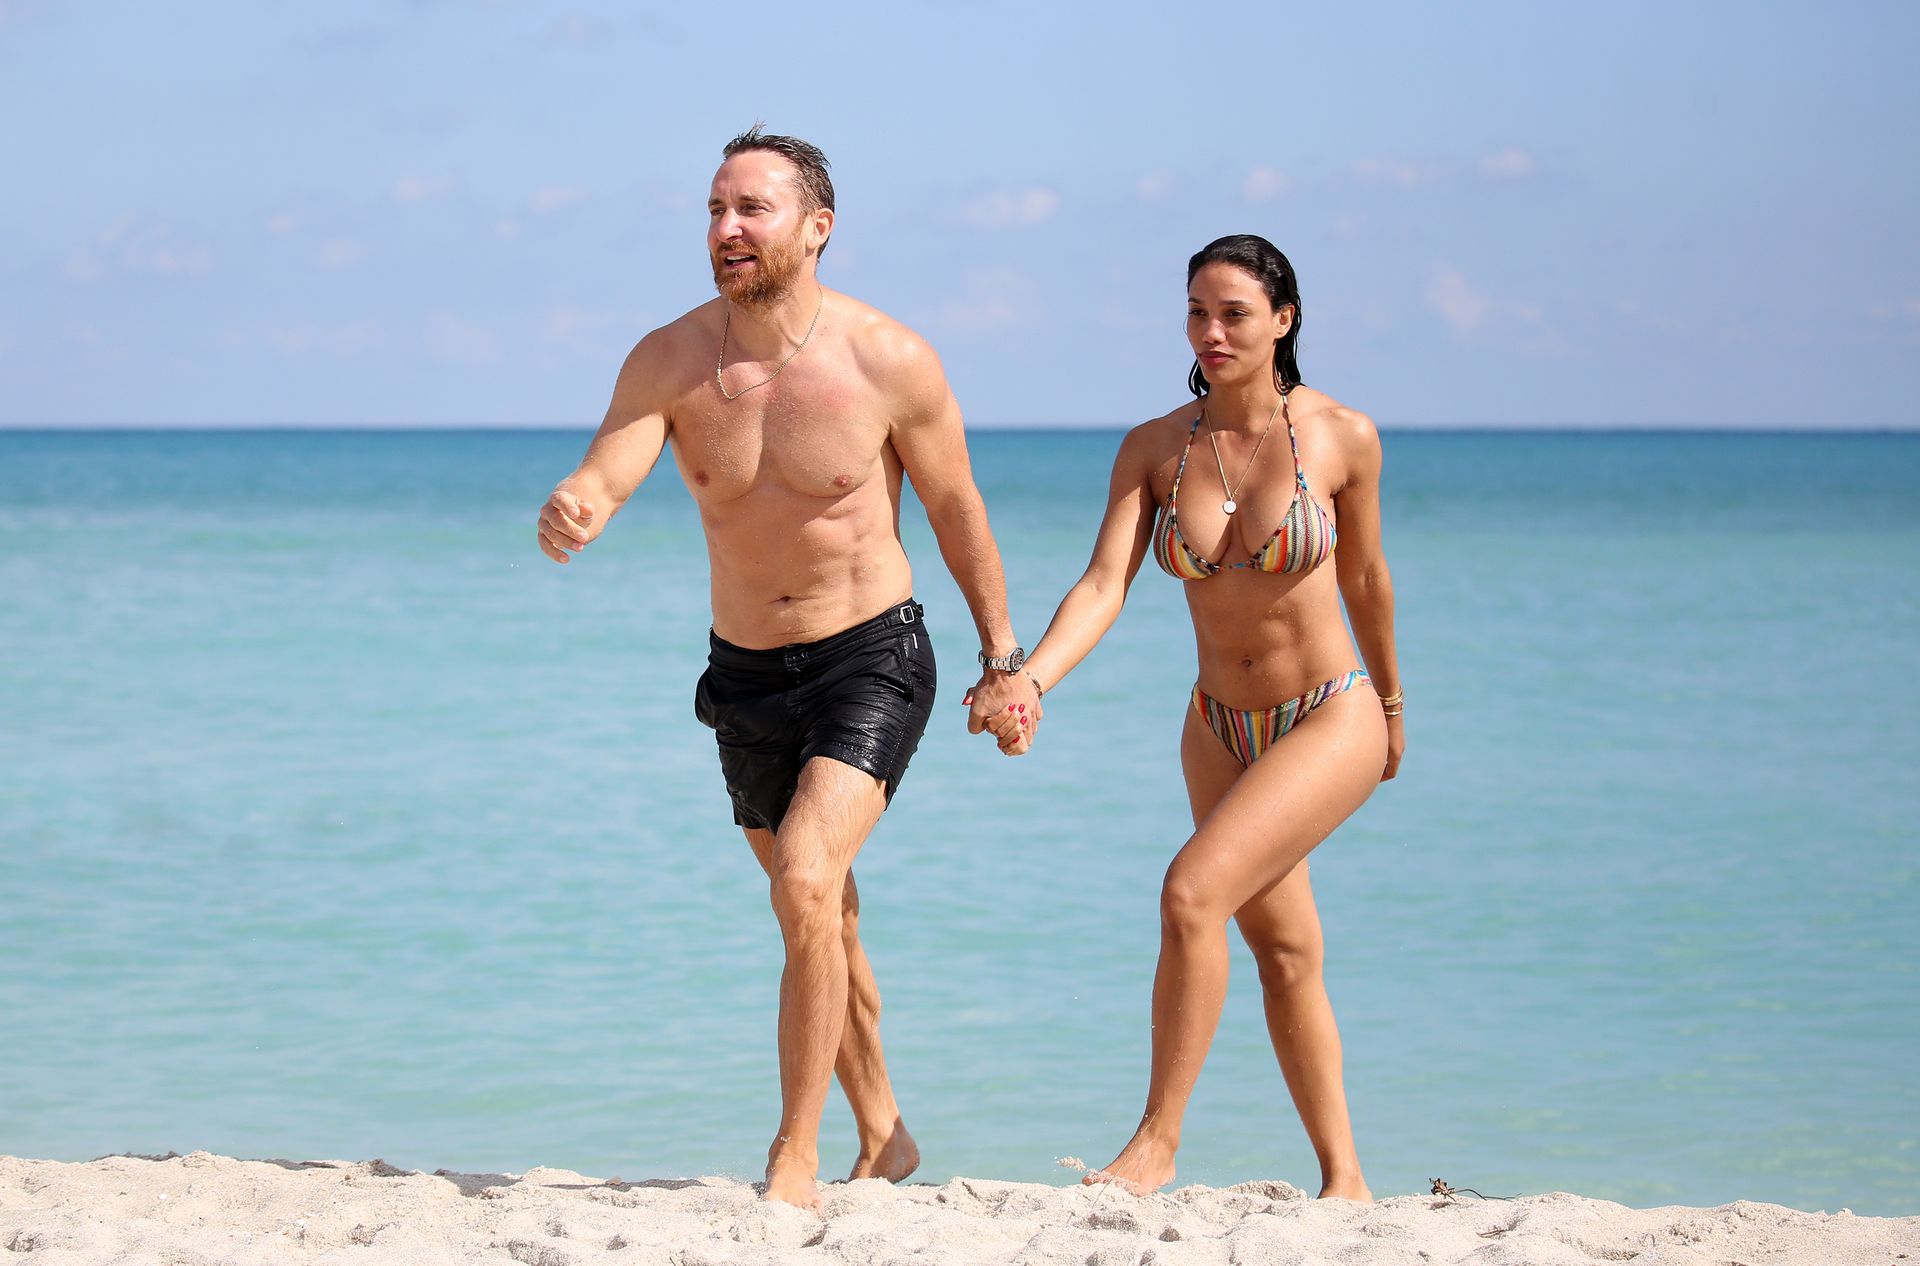 DJ David Guetta and girlfriend Jessica Ledon show off their beach bodies an...